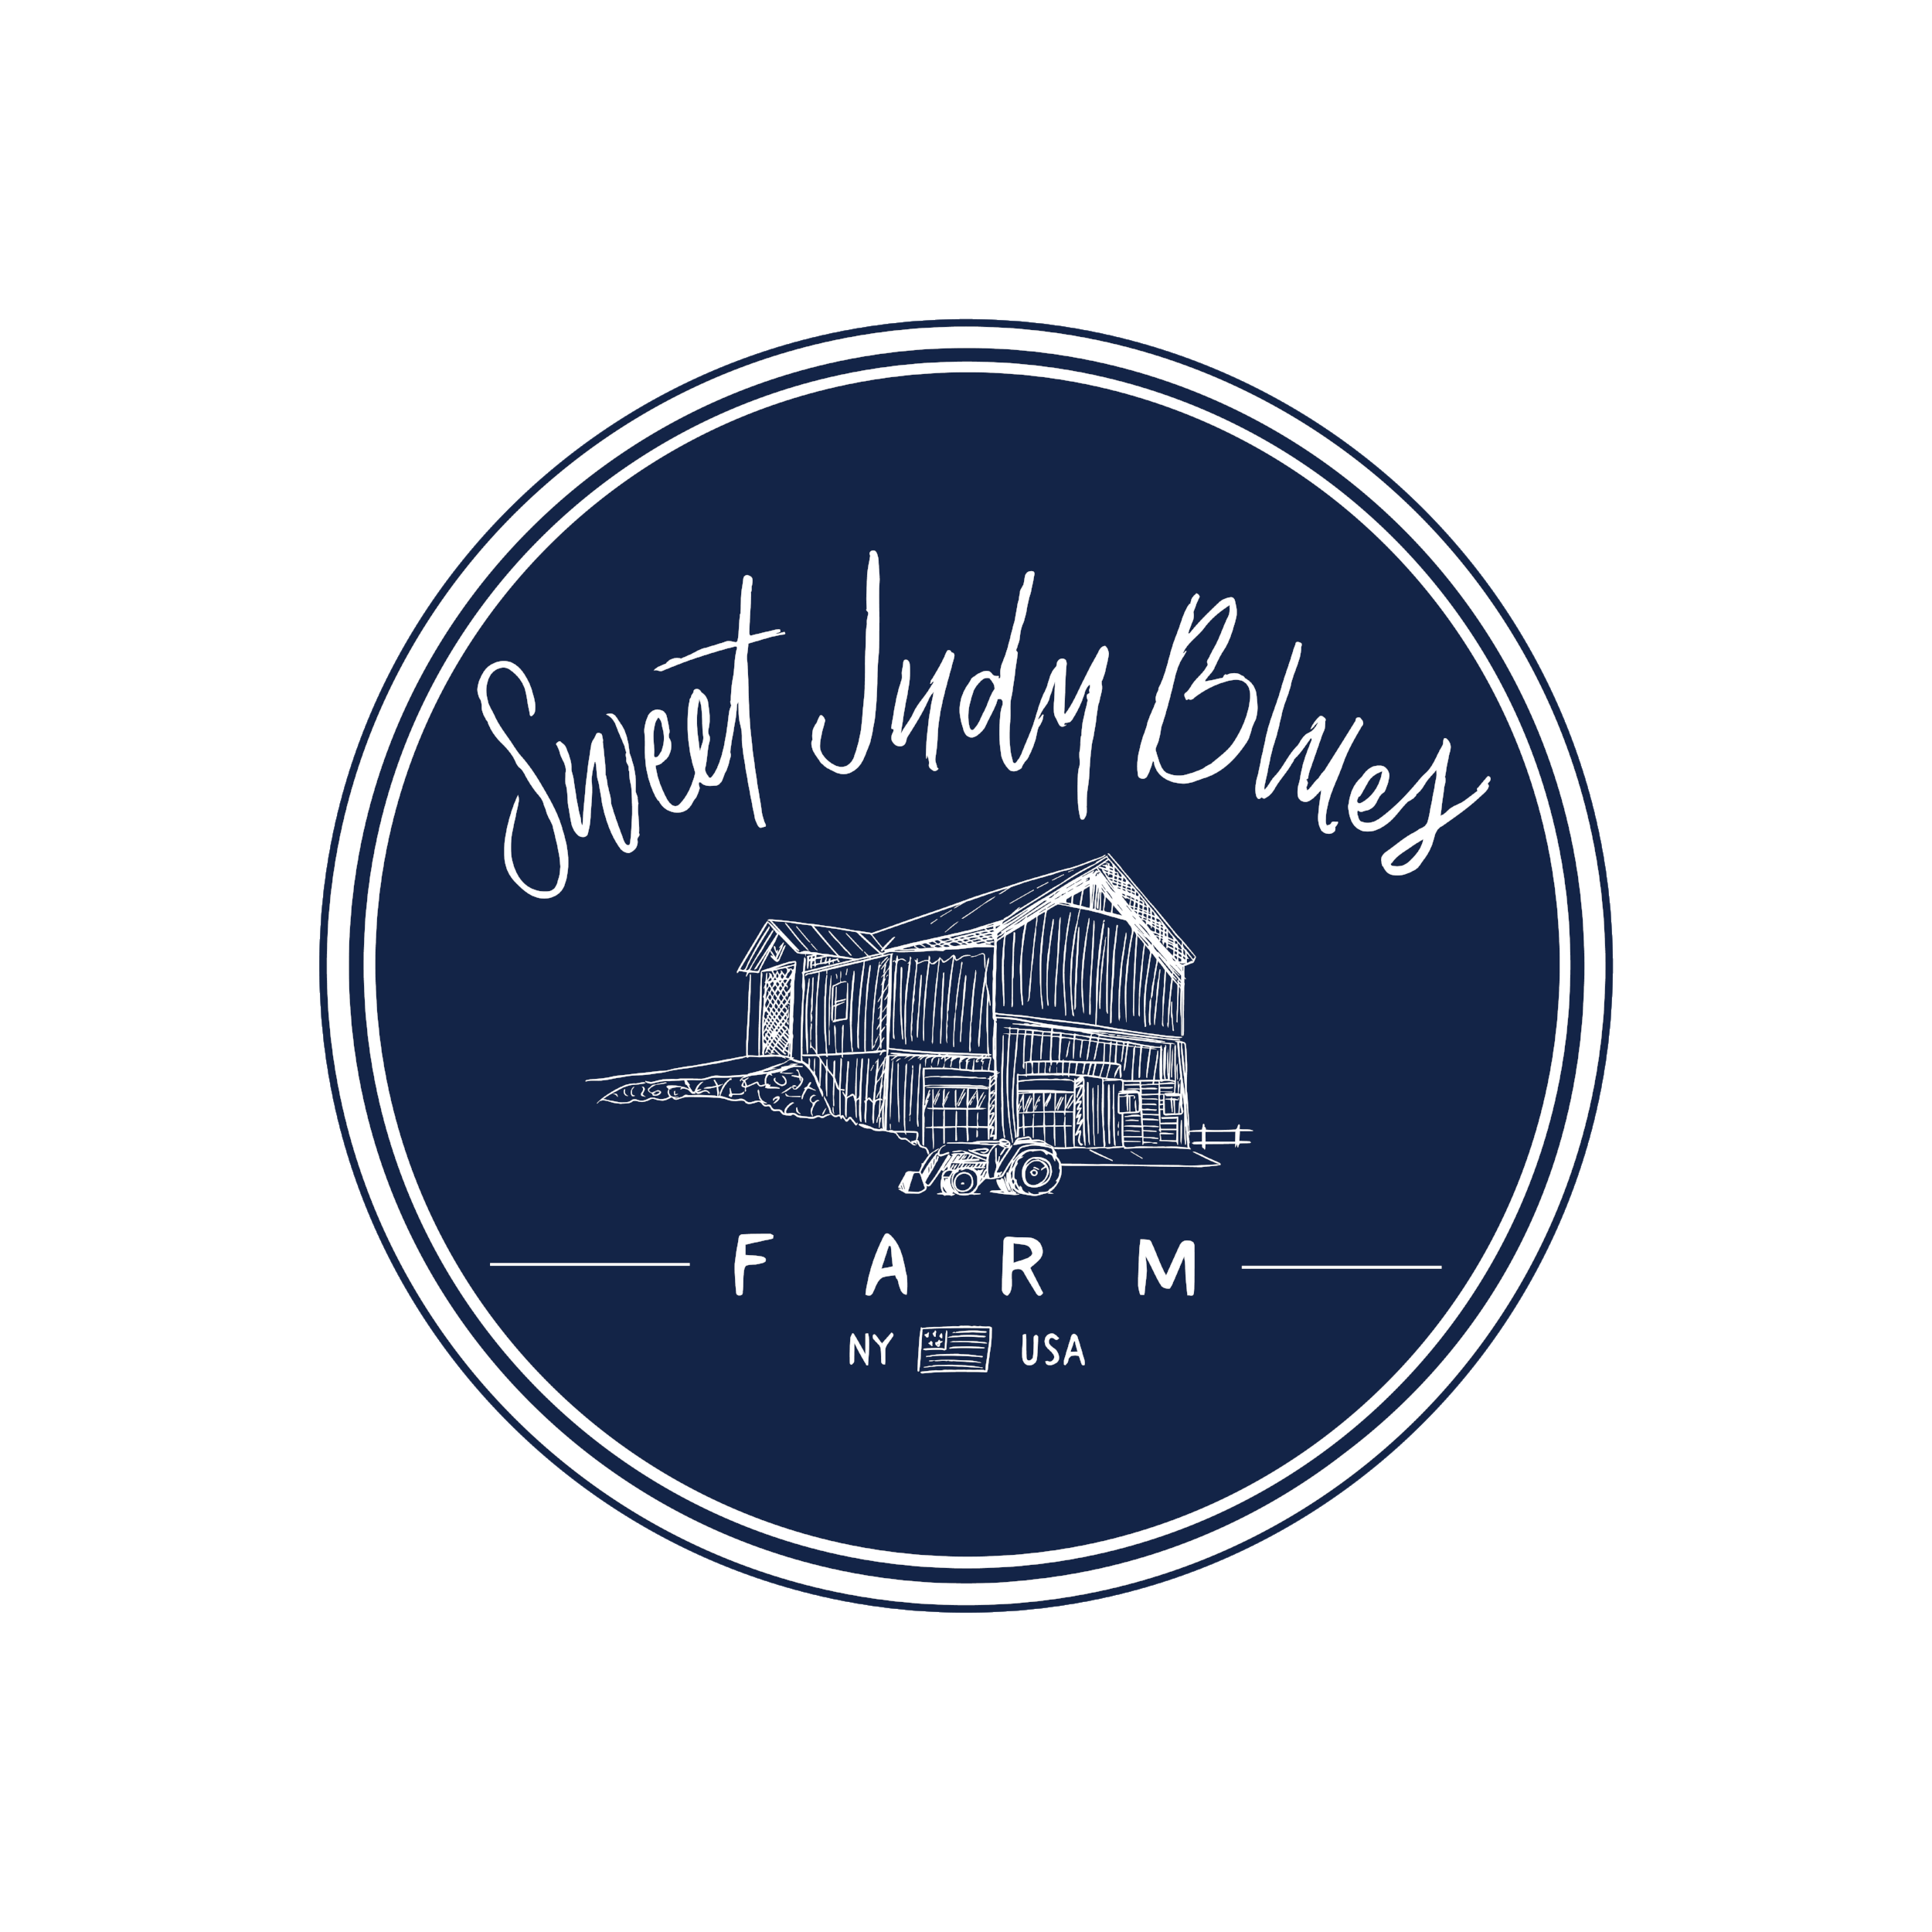 Sweet Judy Blues Farm